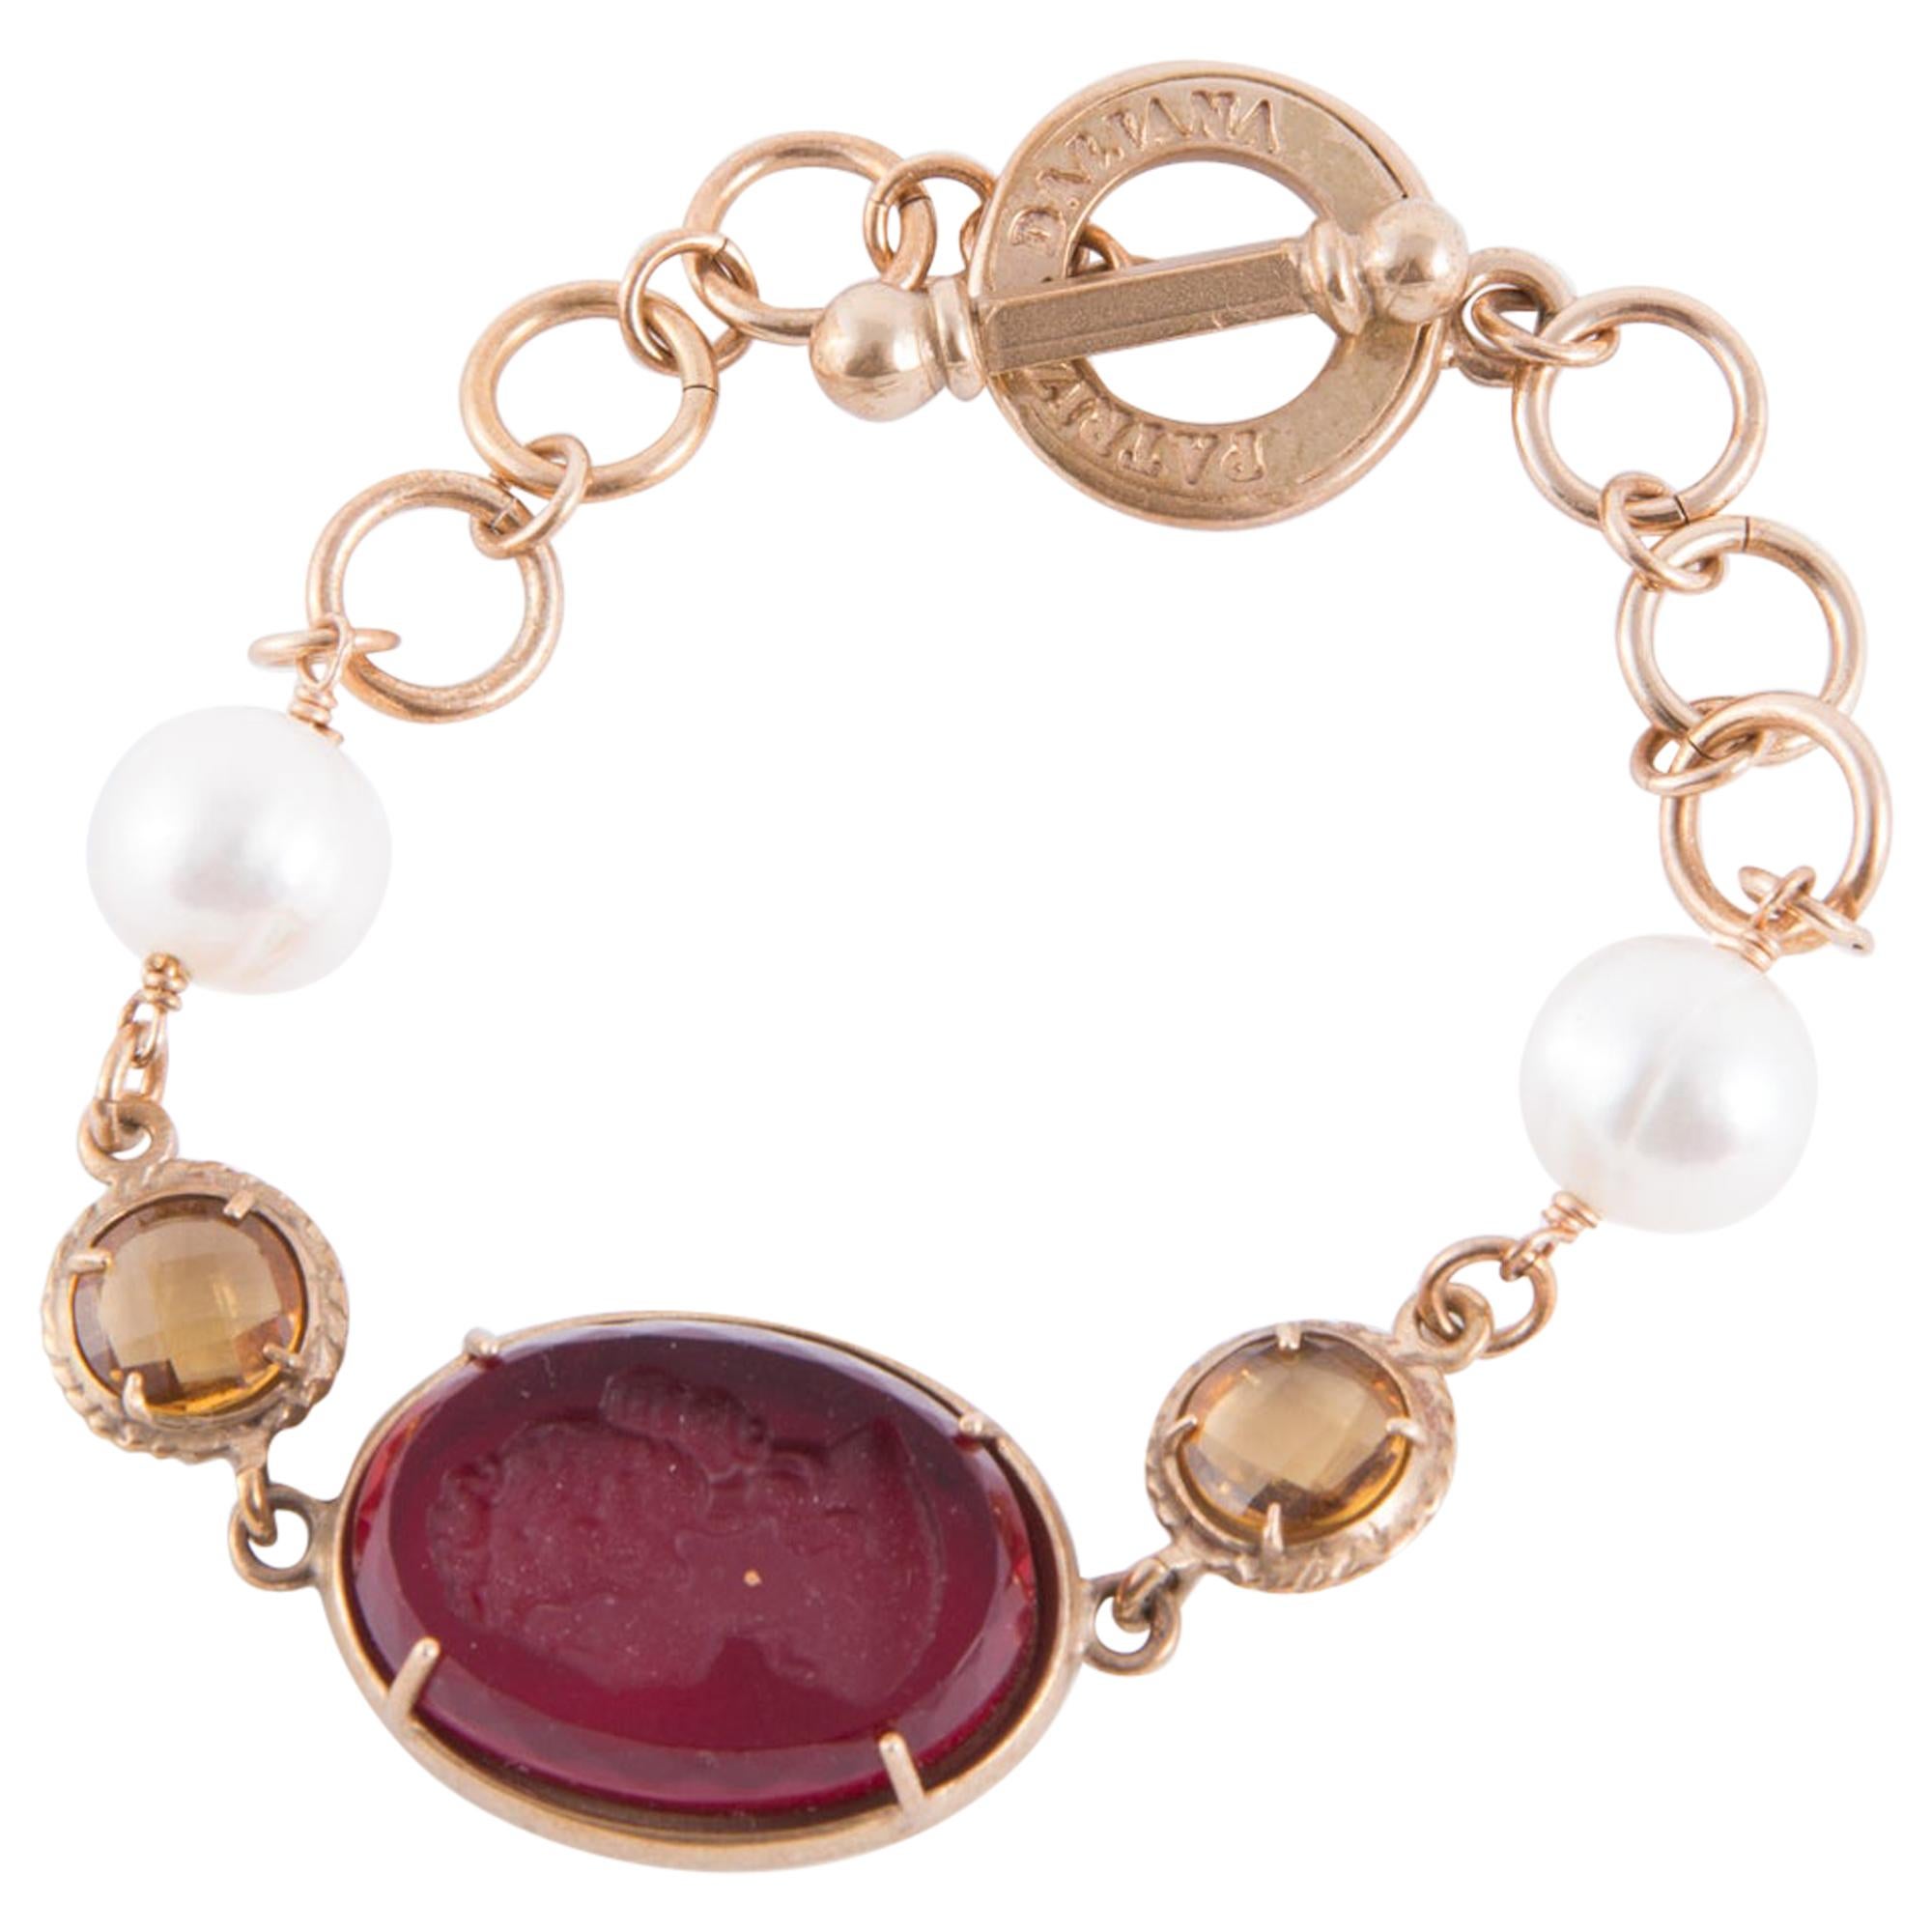 Patrizia Daliana Murano Glass Cameo Chain bracelet